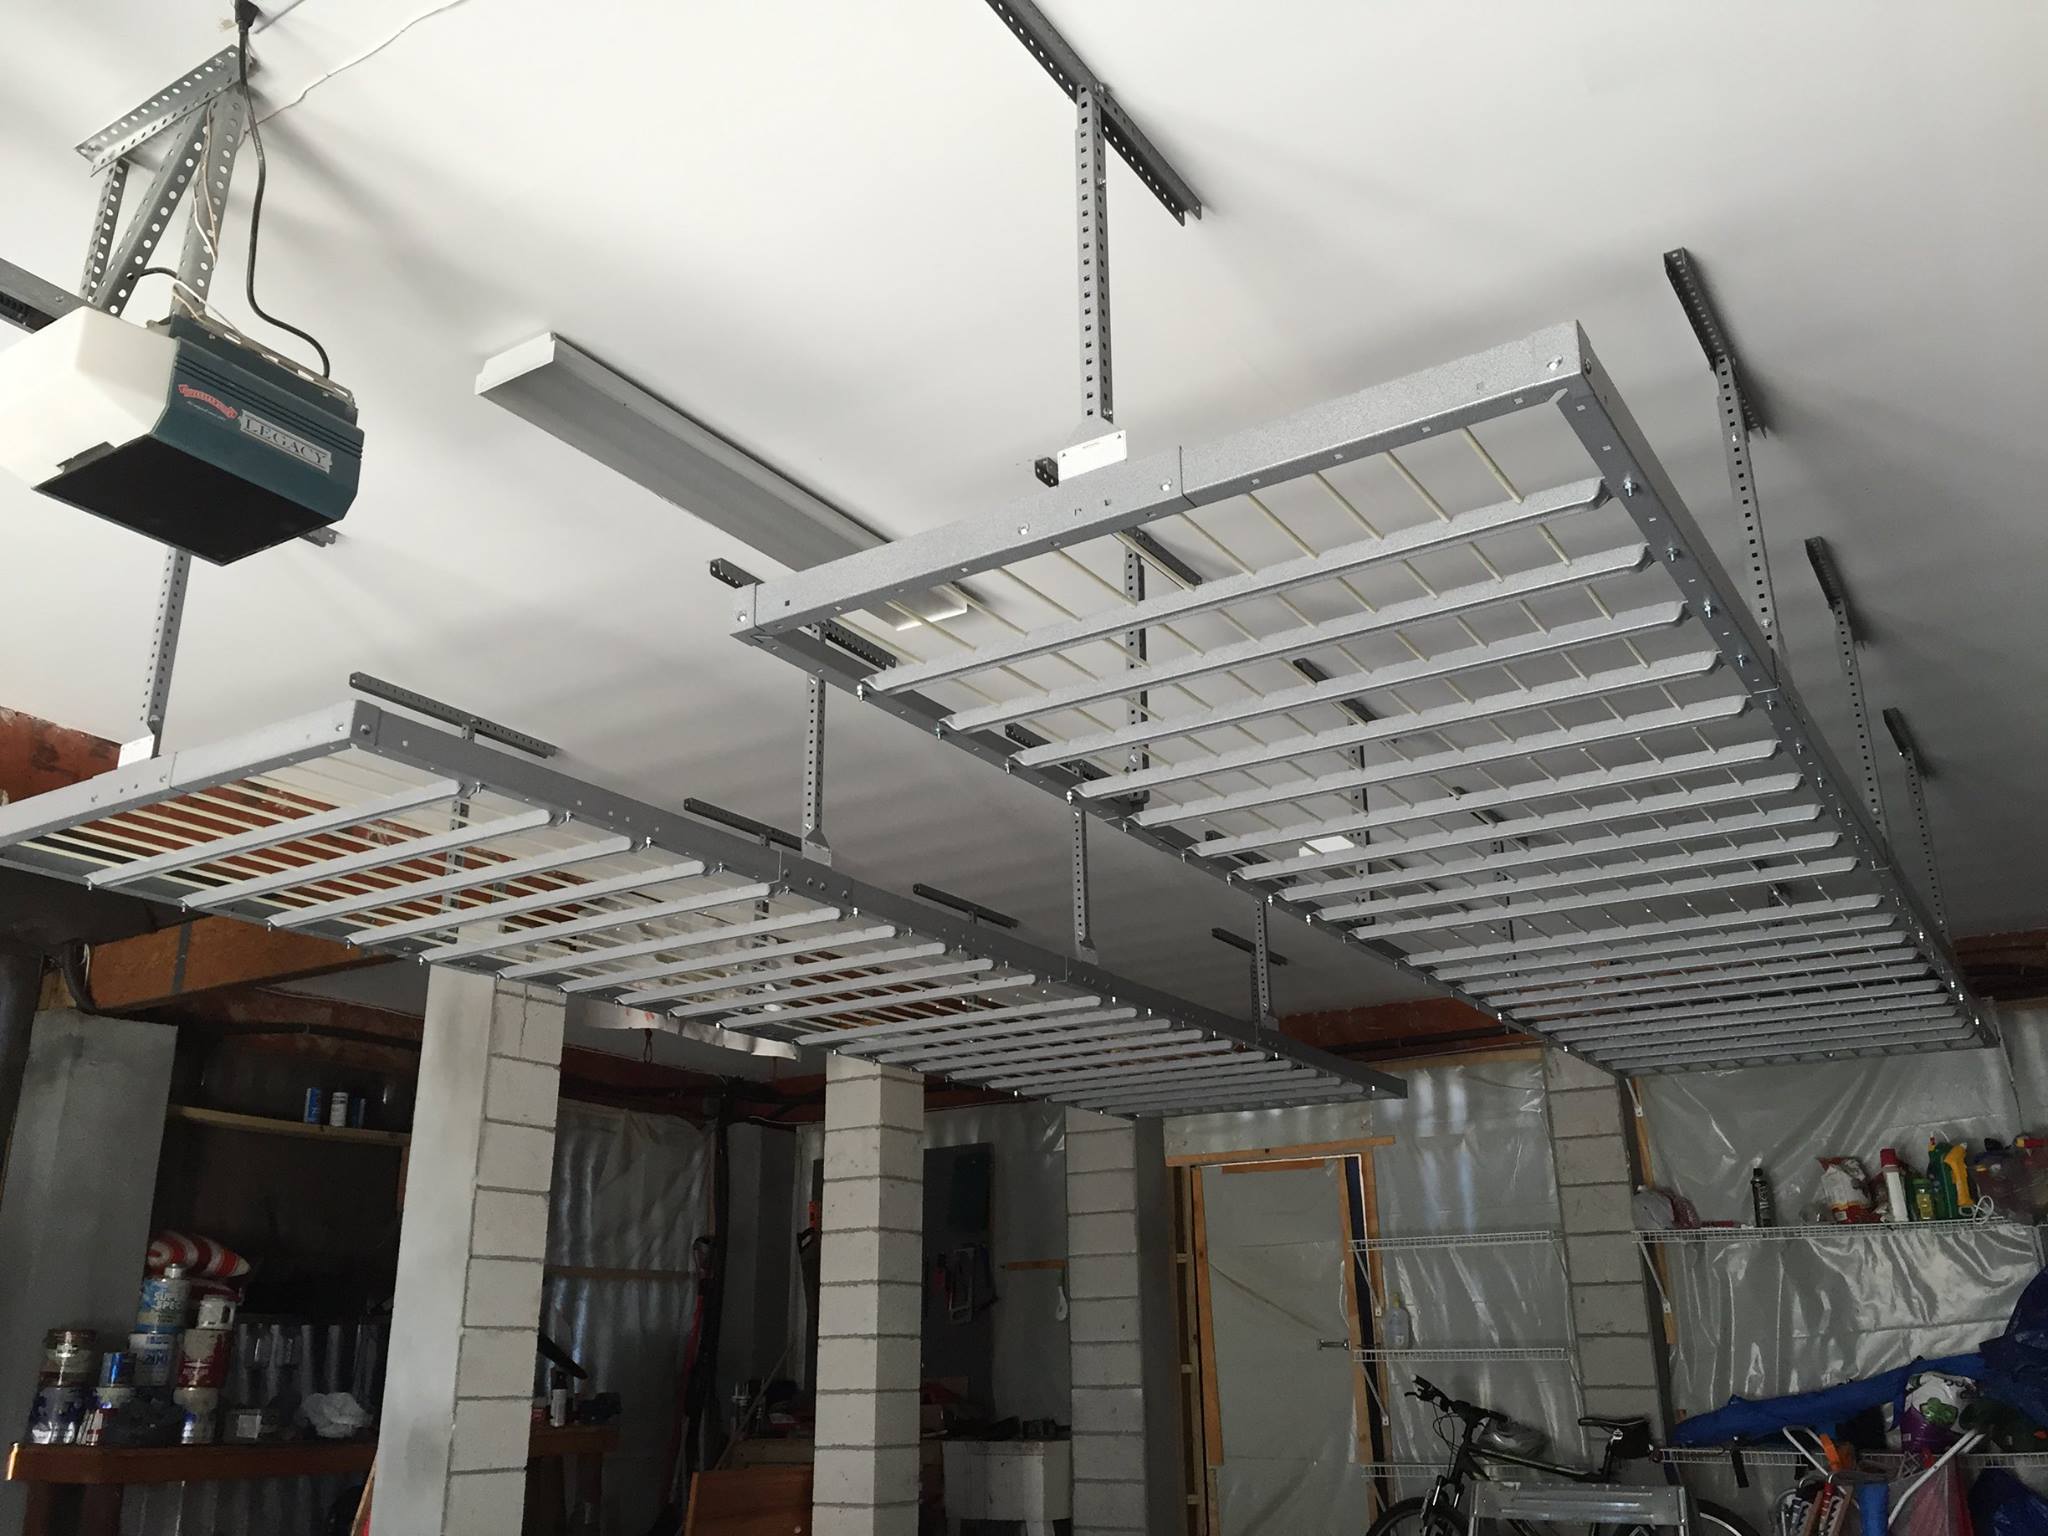 Sturgis overhead garage storage